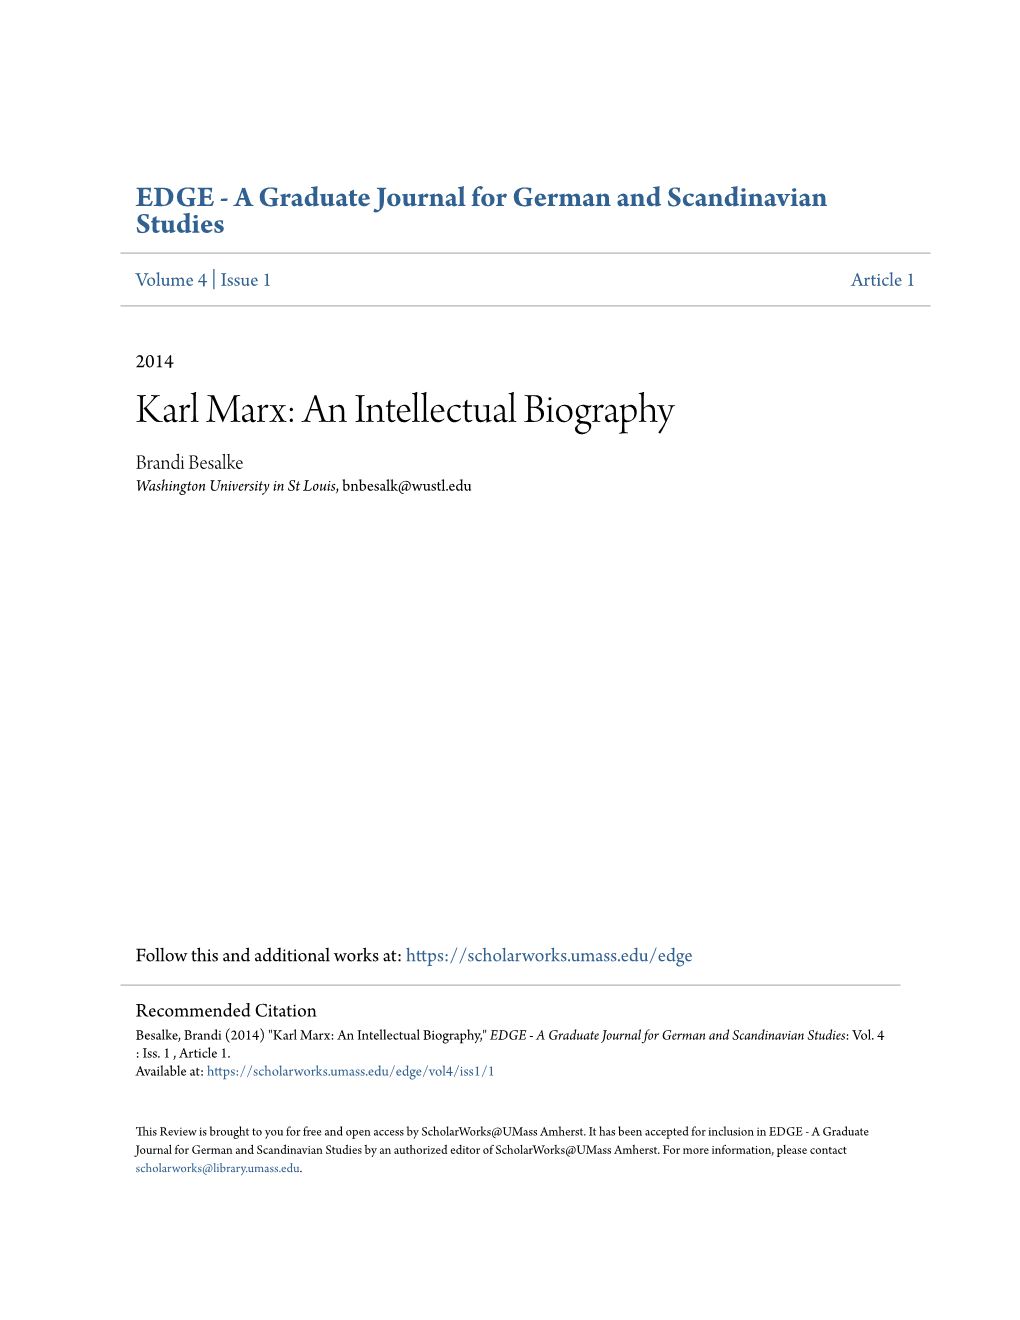 Karl Marx: an Intellectual Biography Brandi Besalke Washington University in St Louis, Bnbesalk@Wustl.Edu